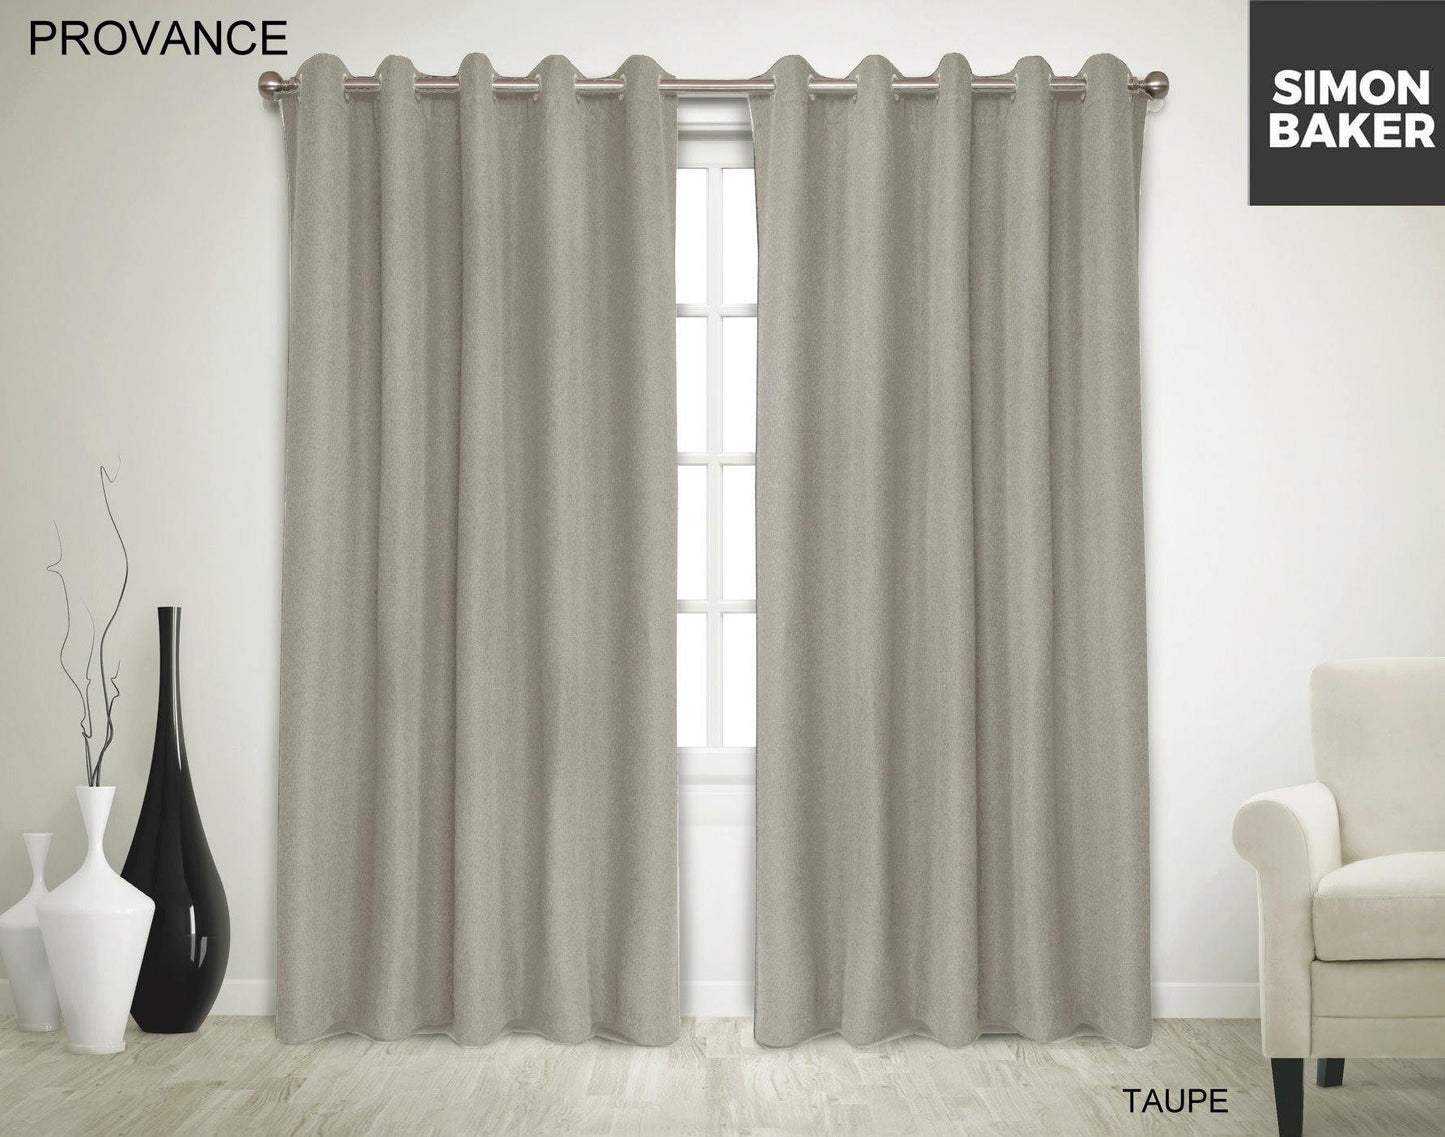 Simon Baker | Provance Eyelet Curtain Taupe (Various Lengths)